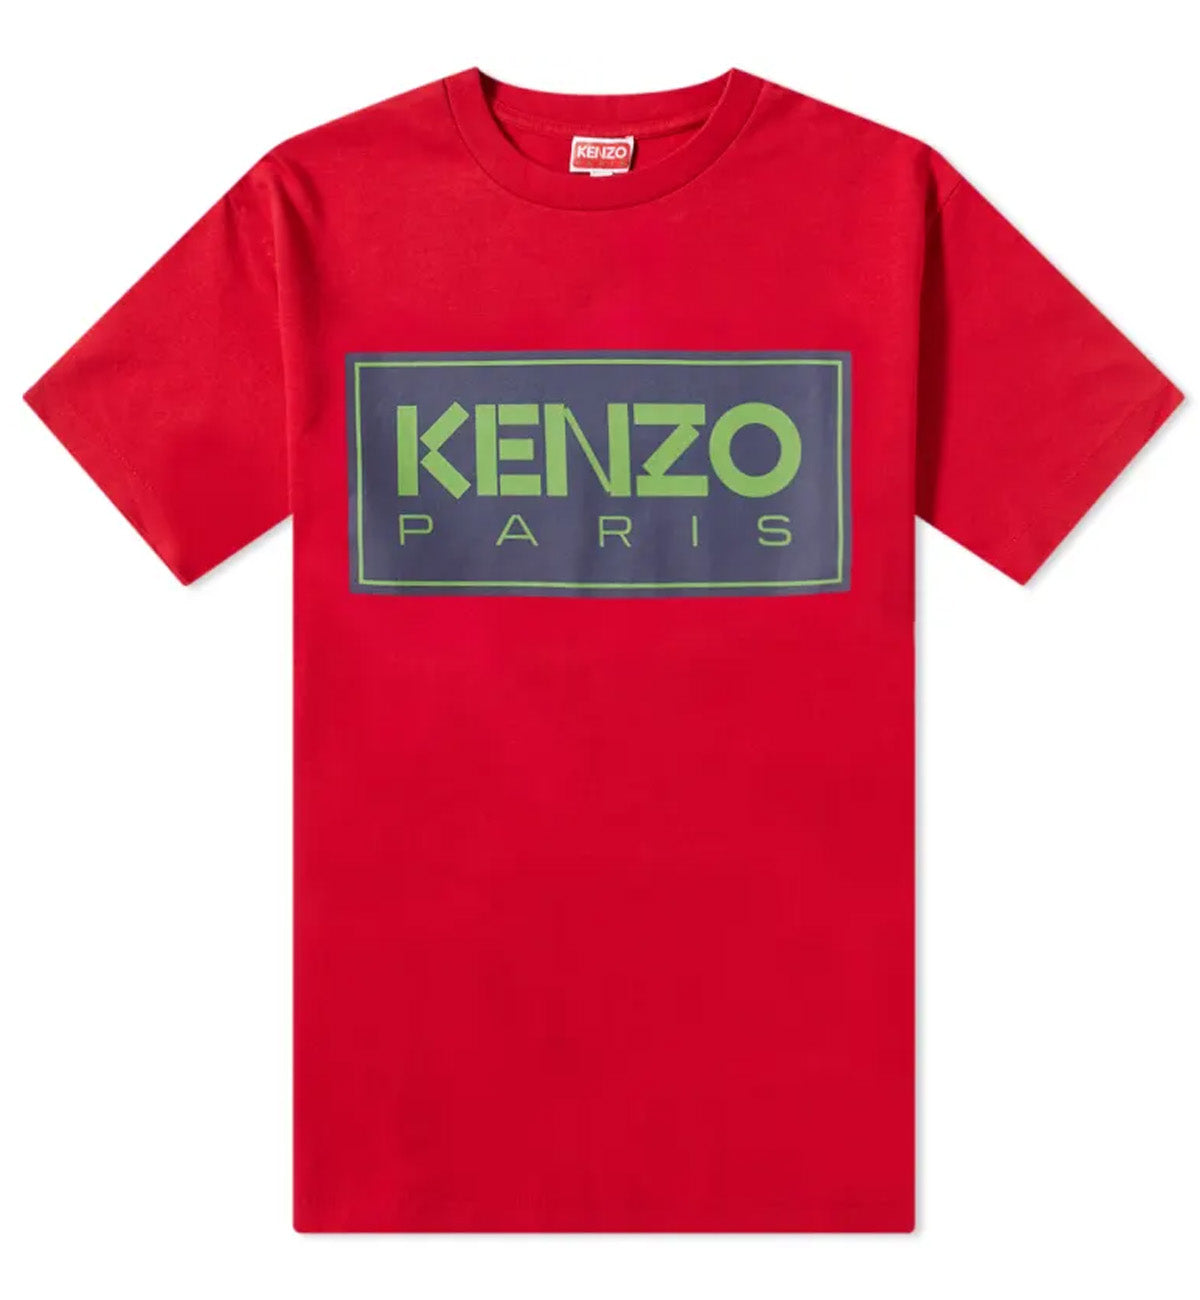 Kenzo Paris Classic T-shirt (Red)